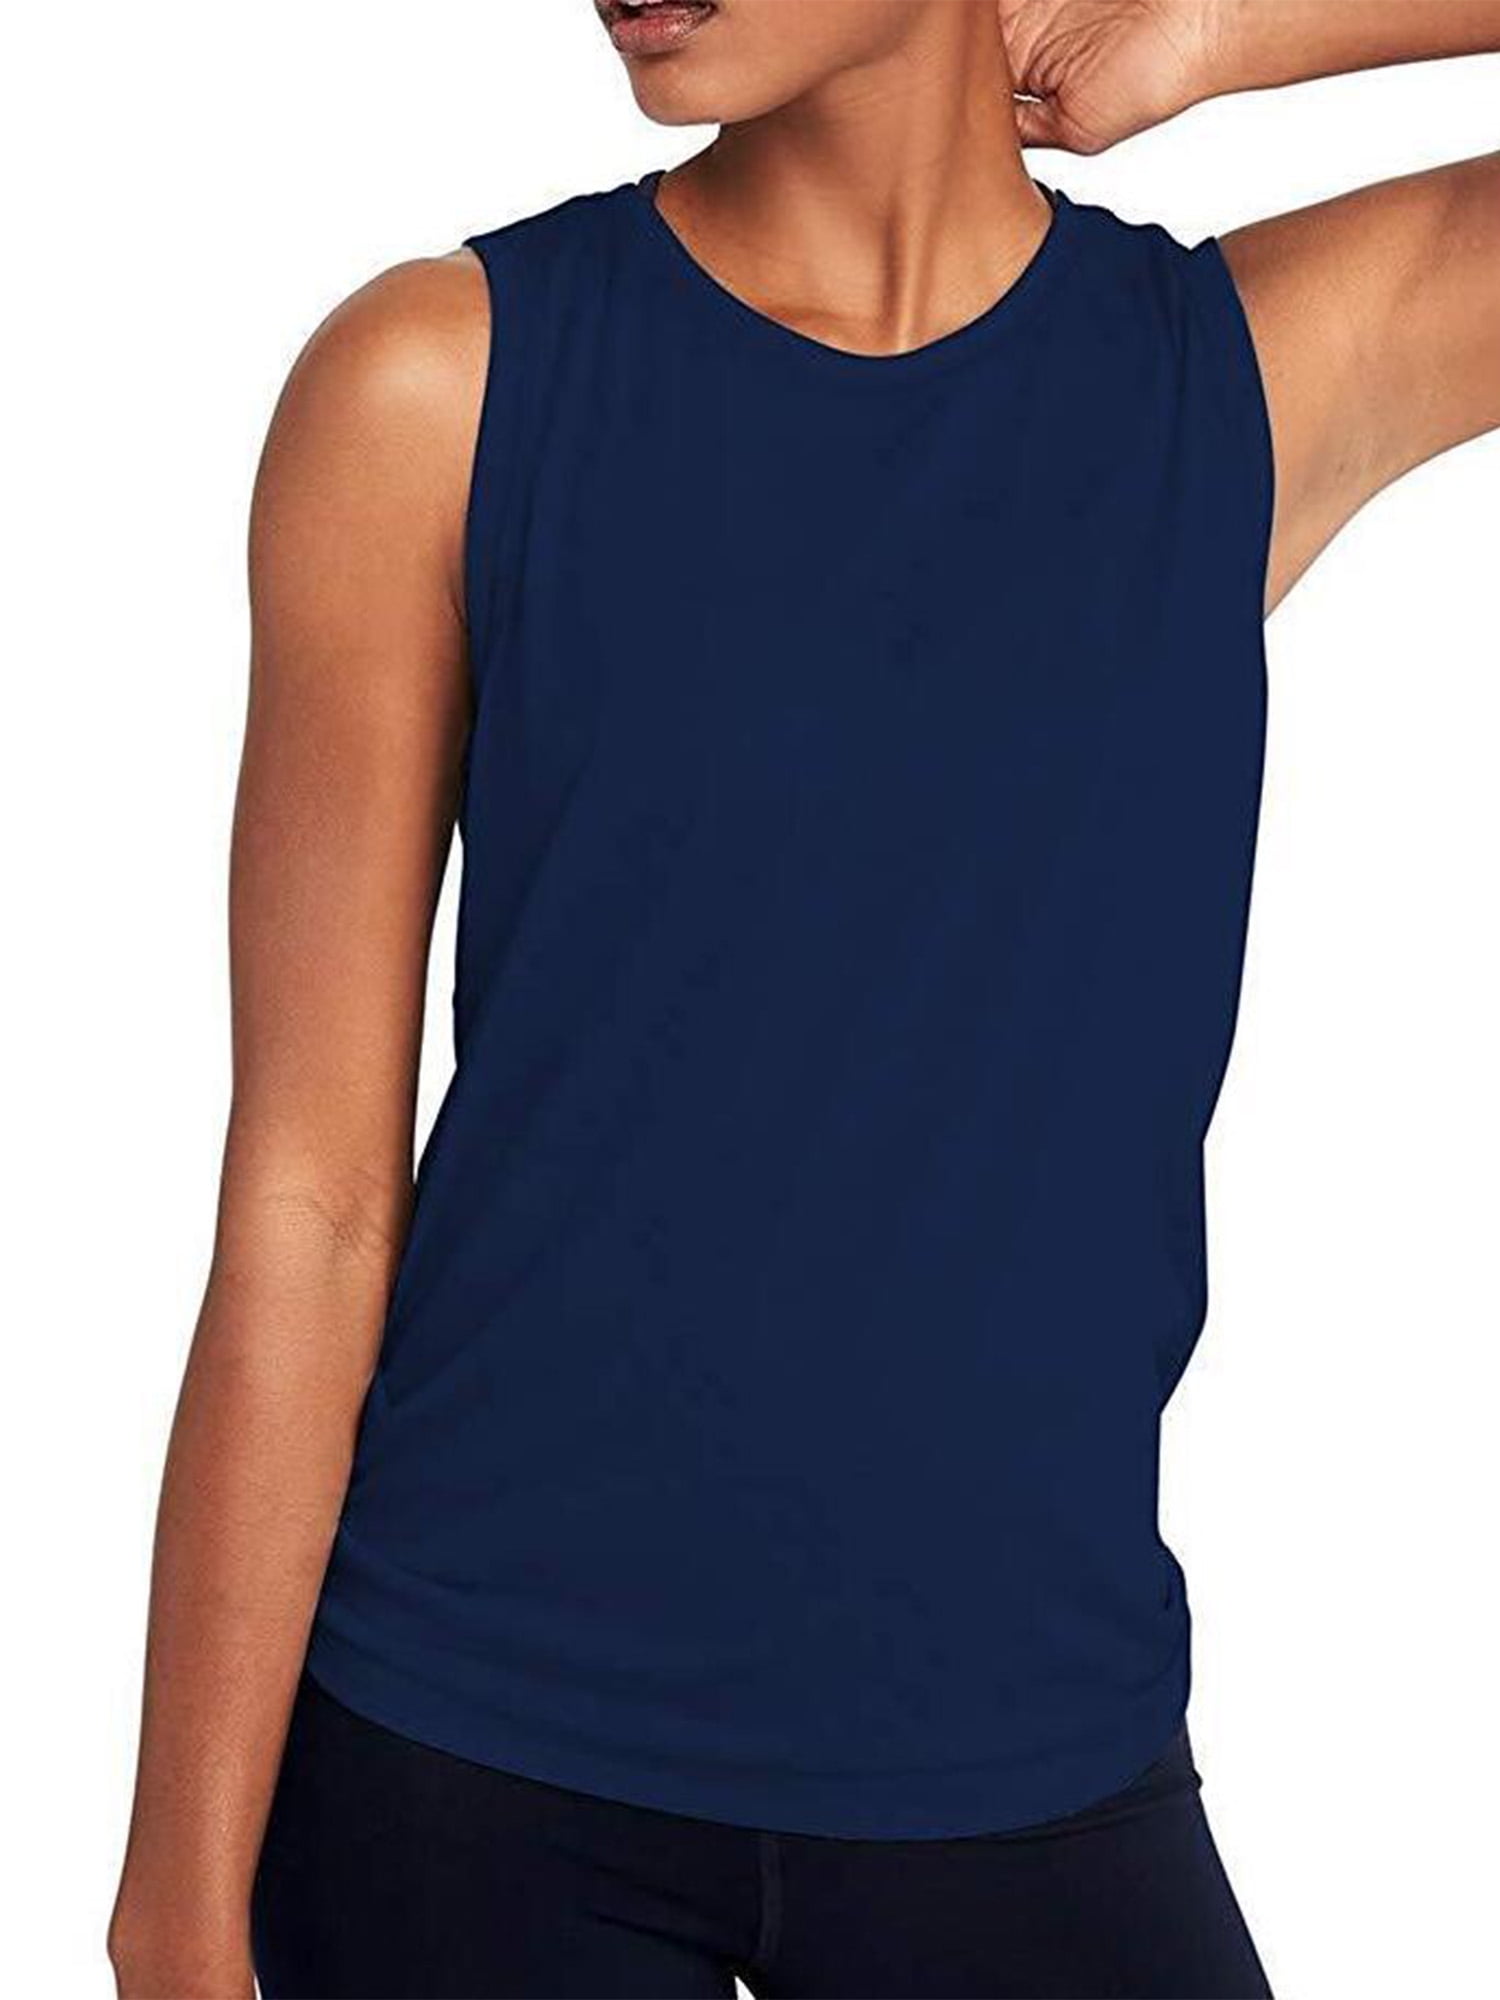 Women's Workout Tank Tops Cotton Sleeveless Athletic Running Shirts Yoga  Gym Top - Walmart.com